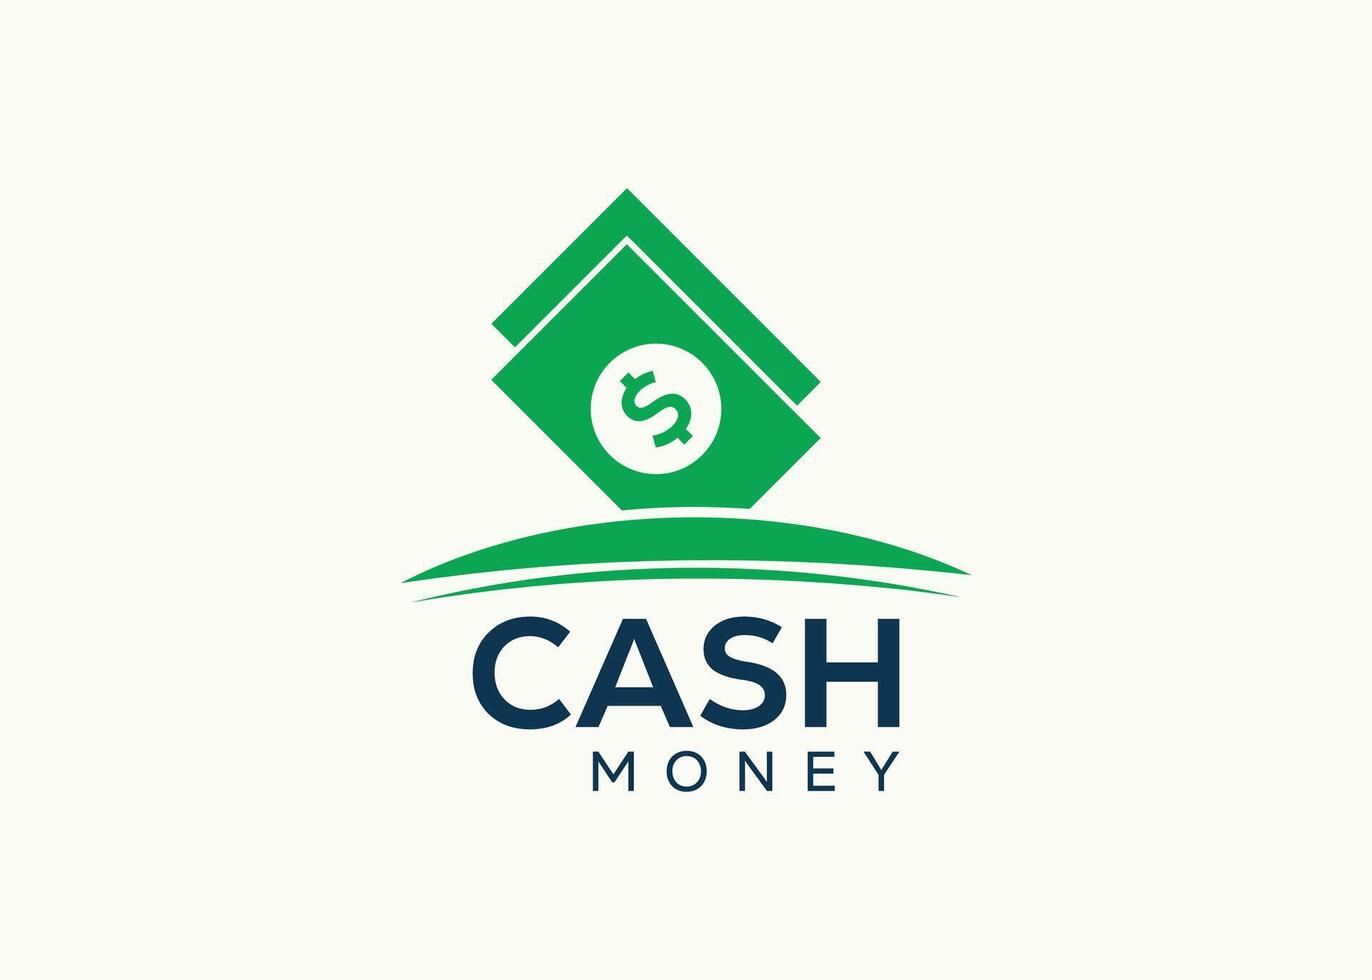 Minimalist Money logo design vector template. Cash money for business finance vector. Money investing logo